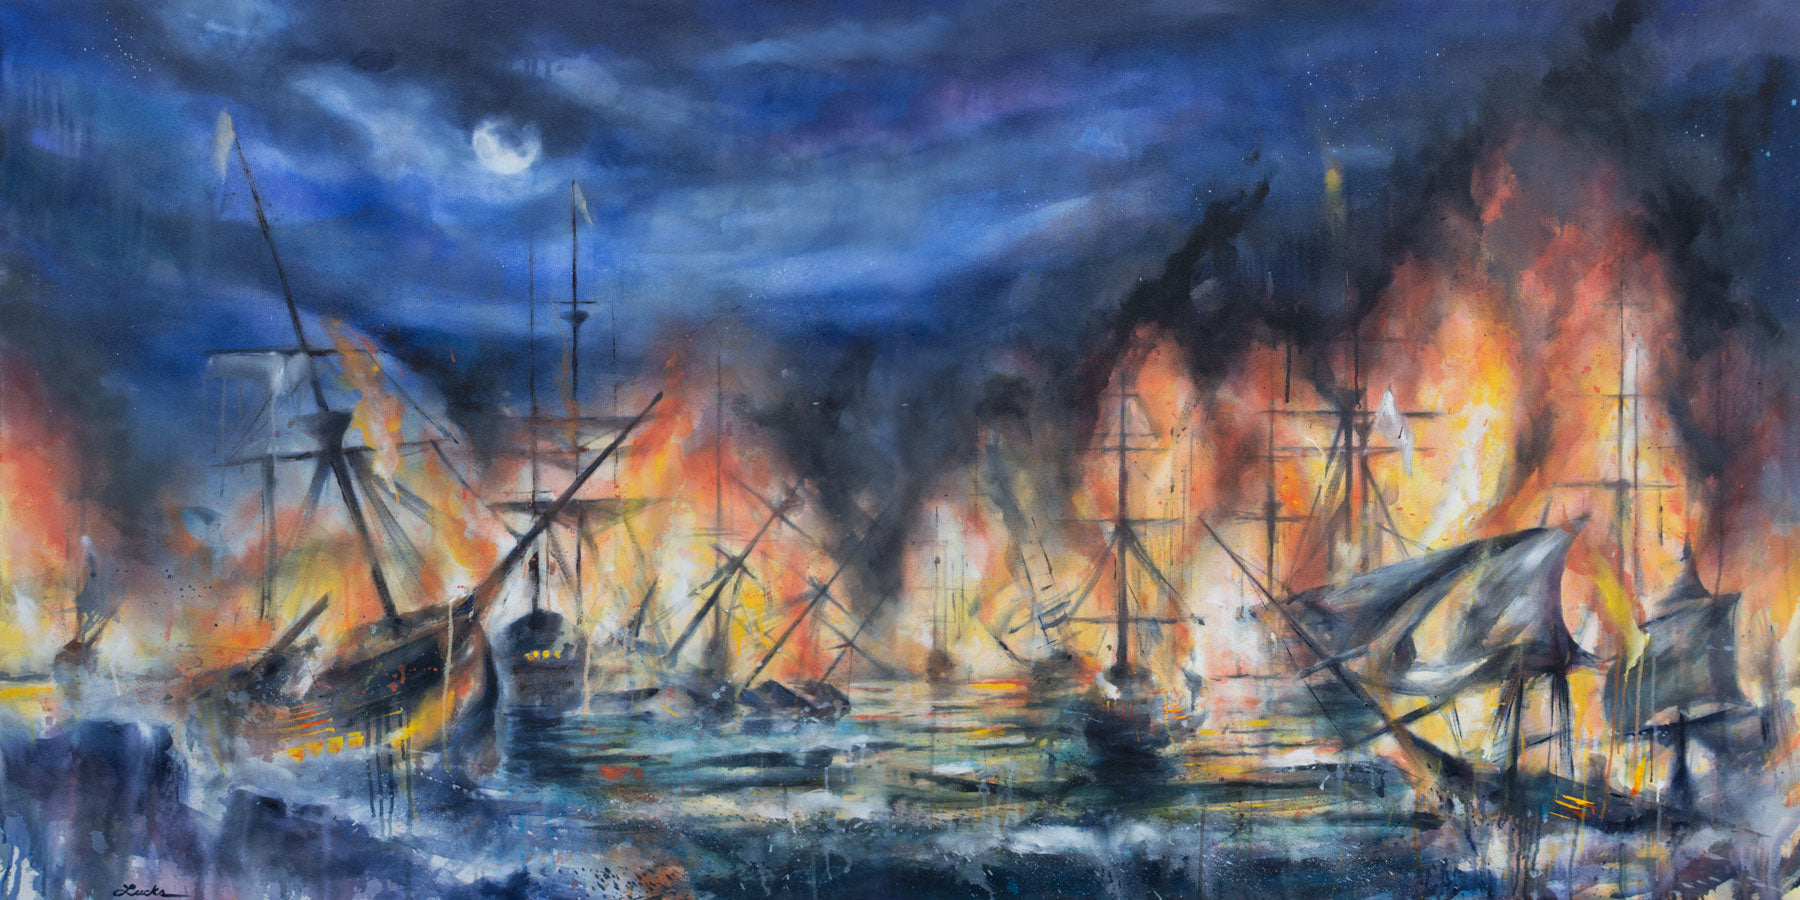 Cortés "Burn the Boats"